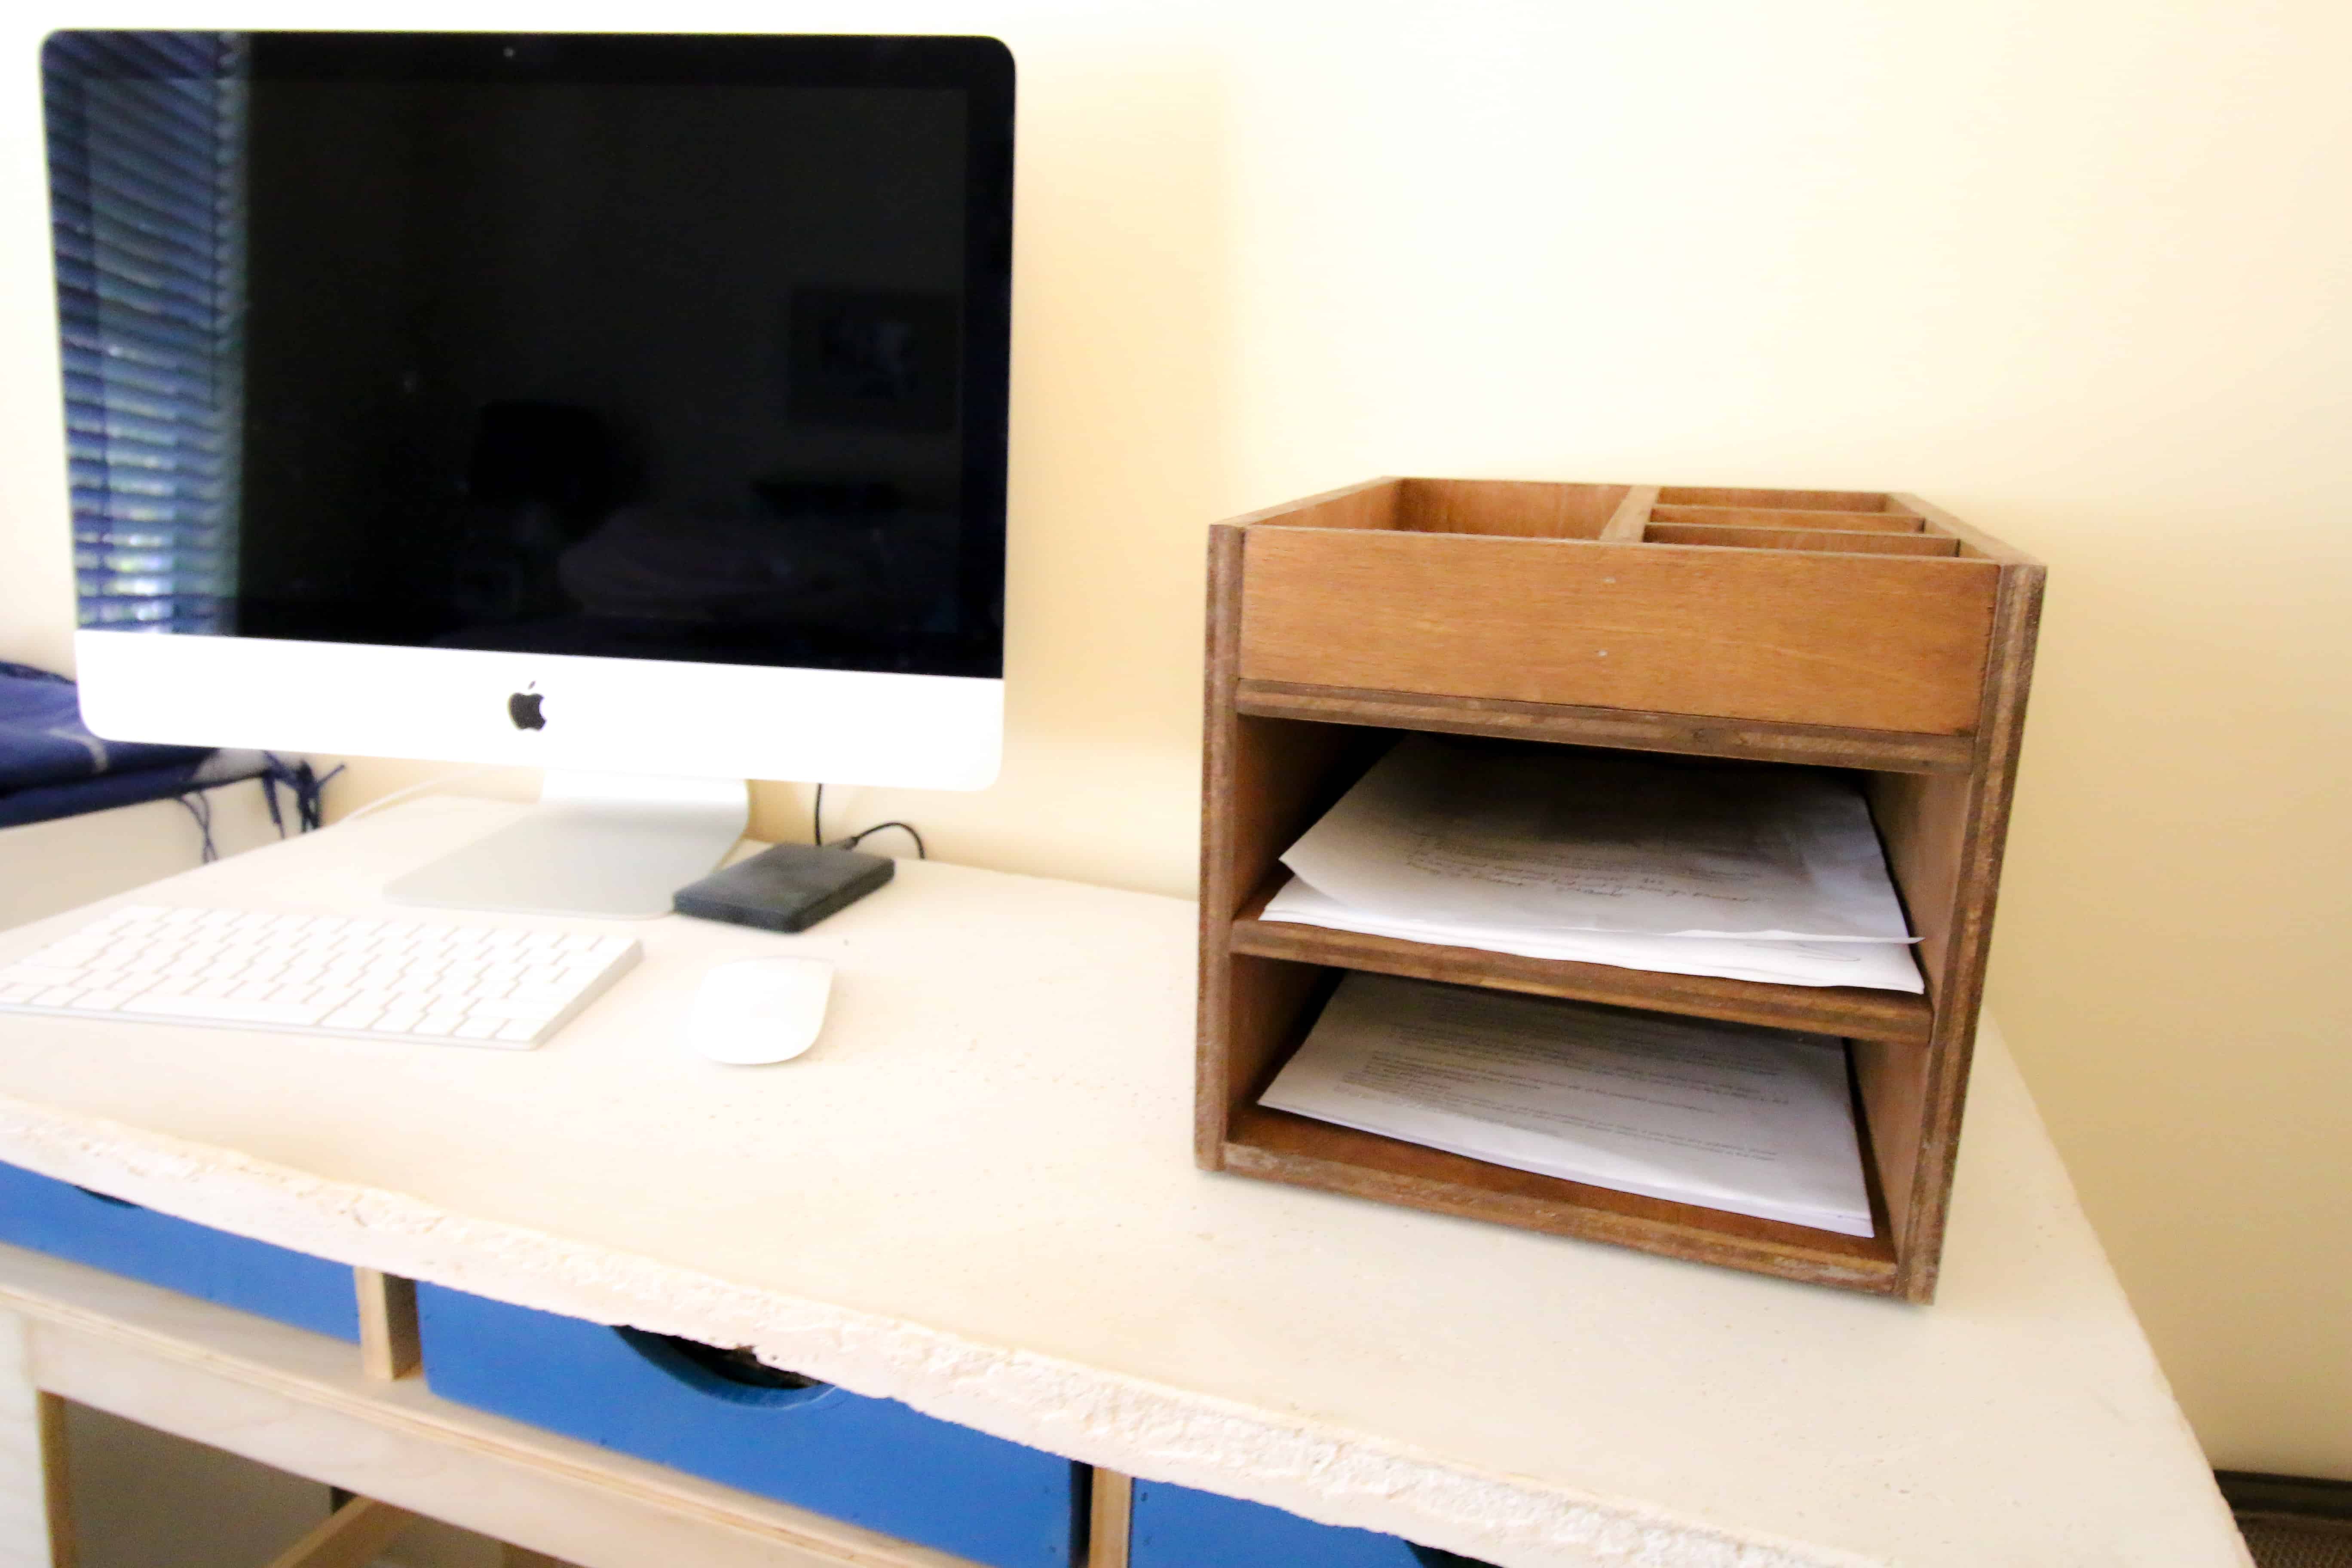 How to Make a Wooden Desk Organizer (DIY) 